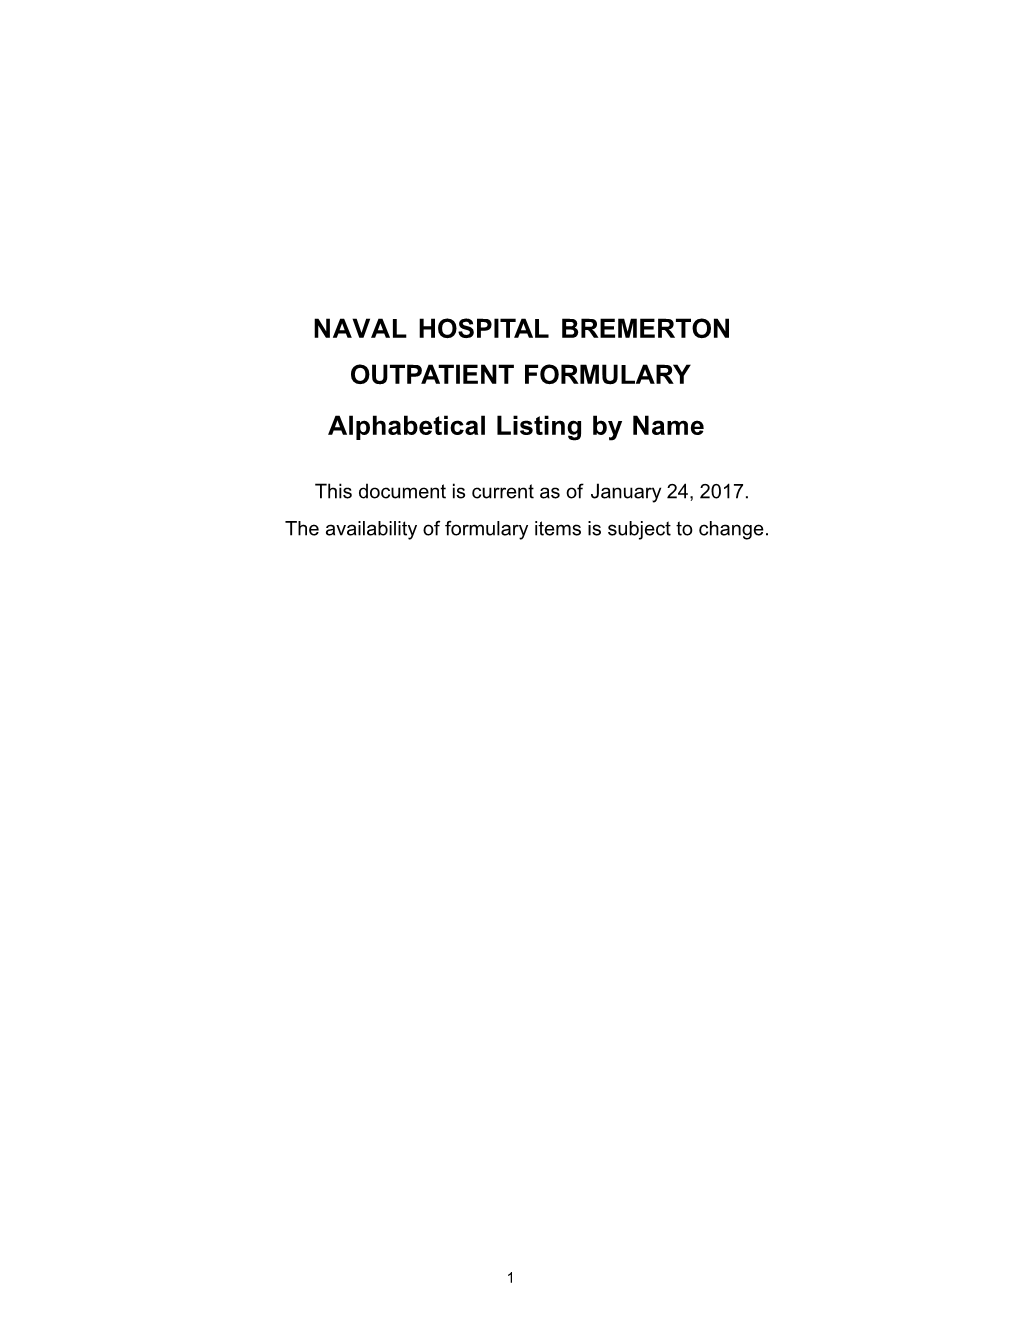 Naval Hospital Bremerton Outpatient Formulary